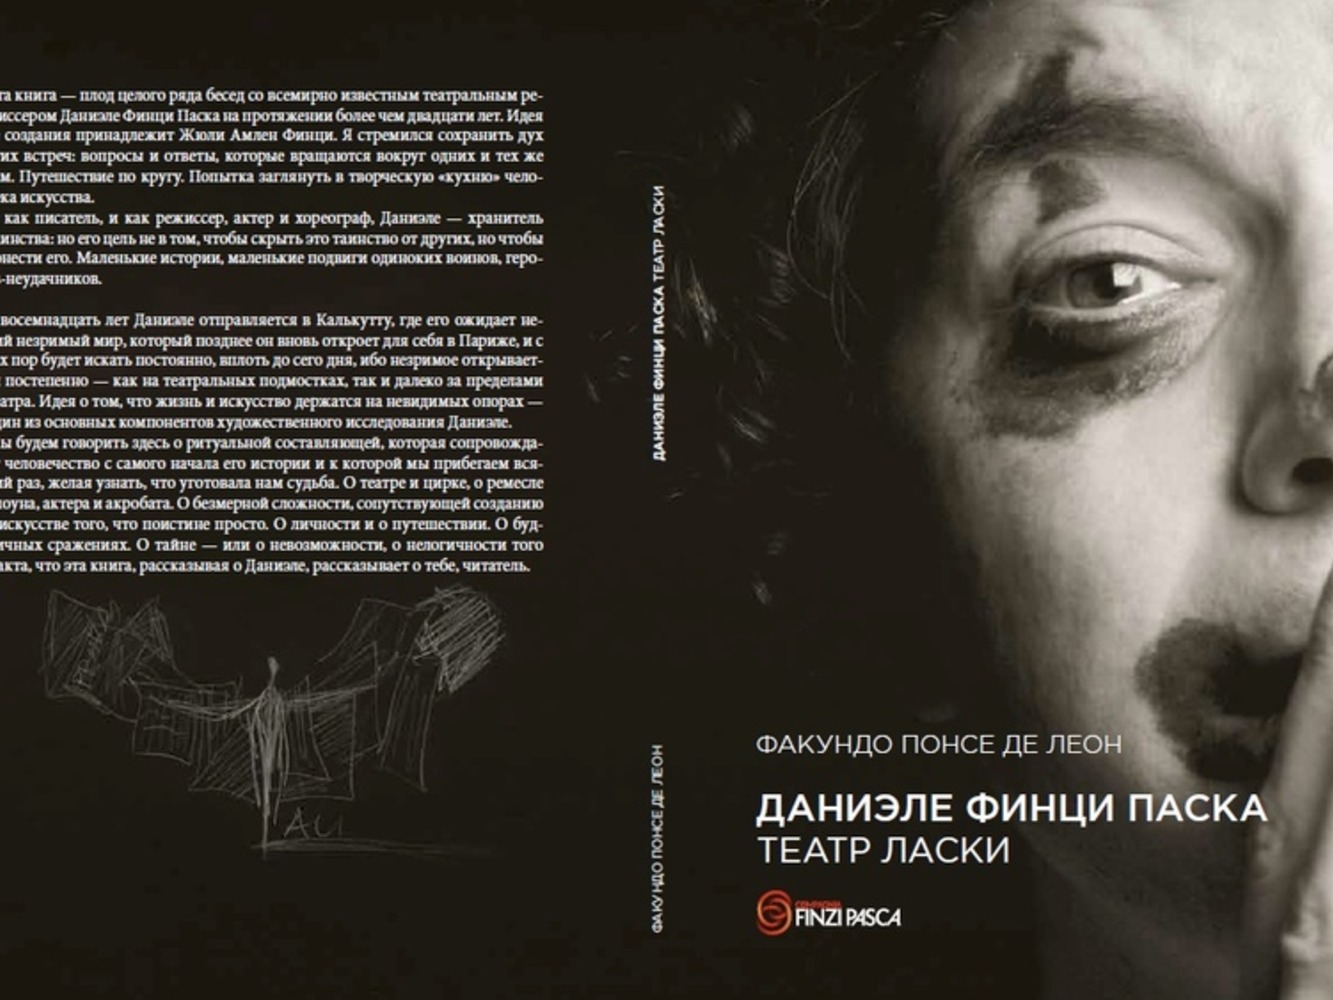 На Новой сцене Александринки пройдёт презентация книги о Даниэле Финци Паска